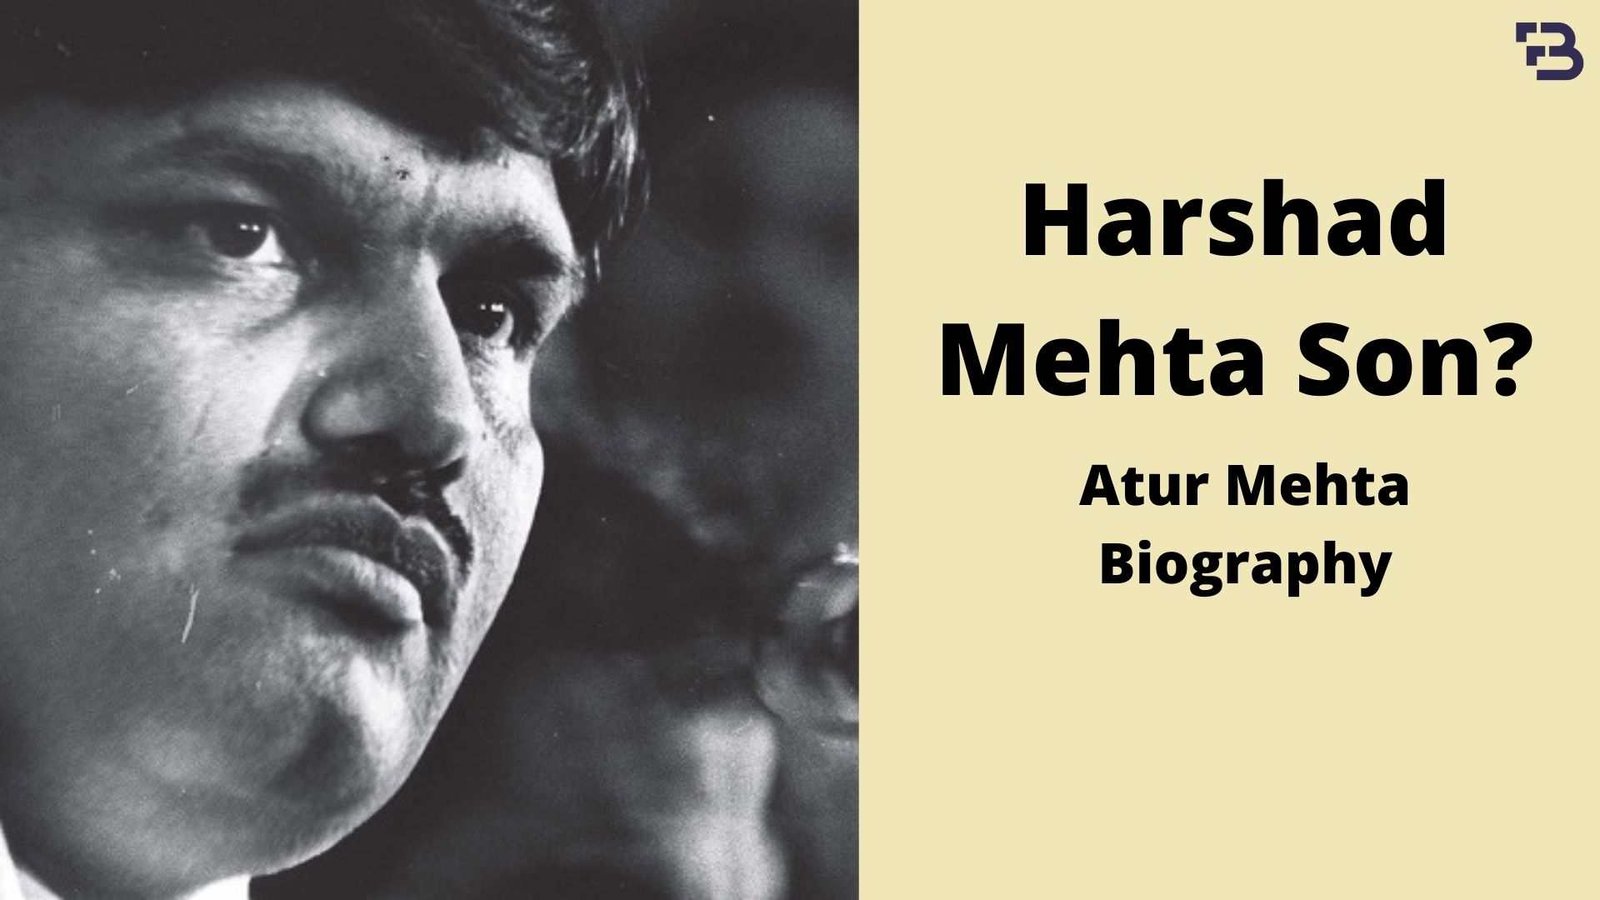 Atur Mehta Biography, Net Worth (Harshad Mehta Son), Age, Height